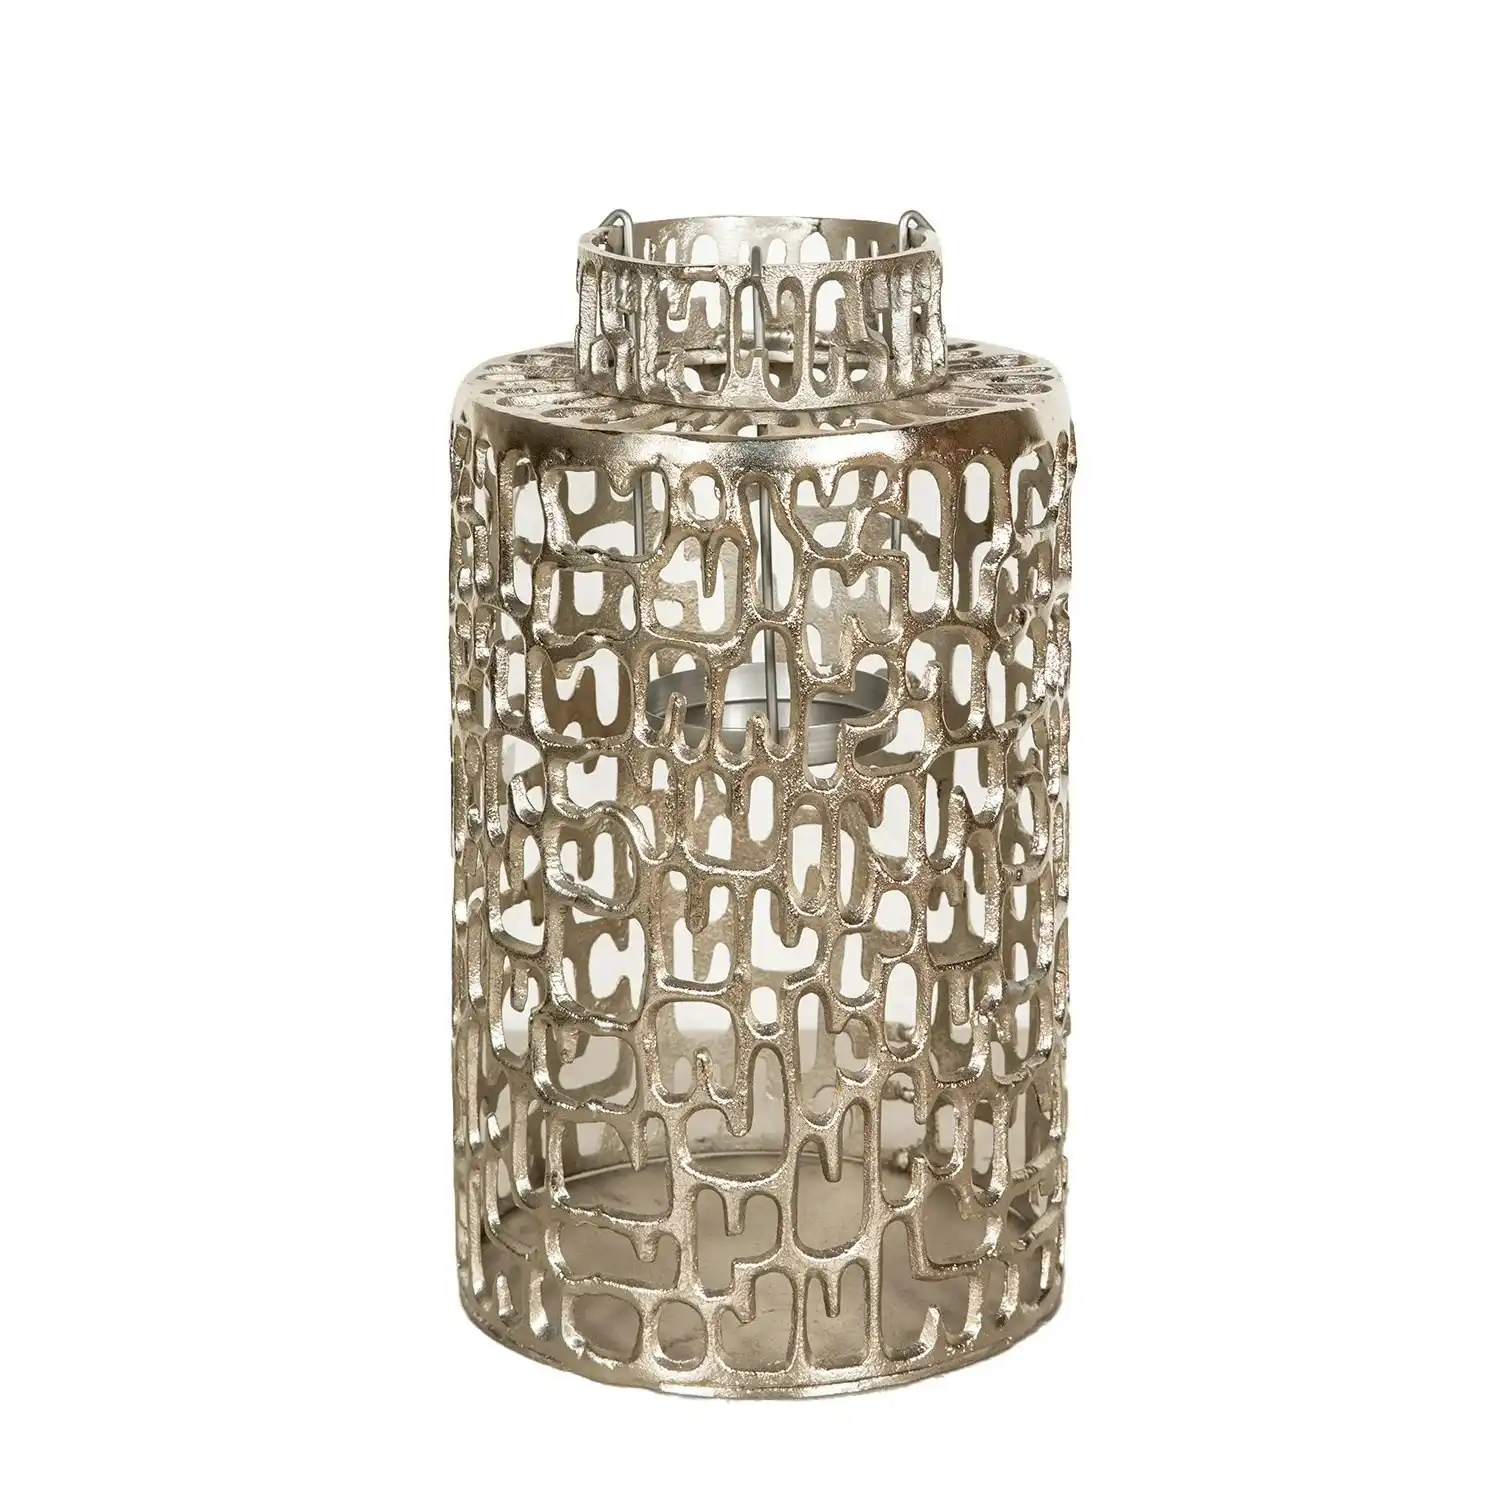 SSH Collection Jali 29.5cm Tall Lantern/Vase - Antique Brass